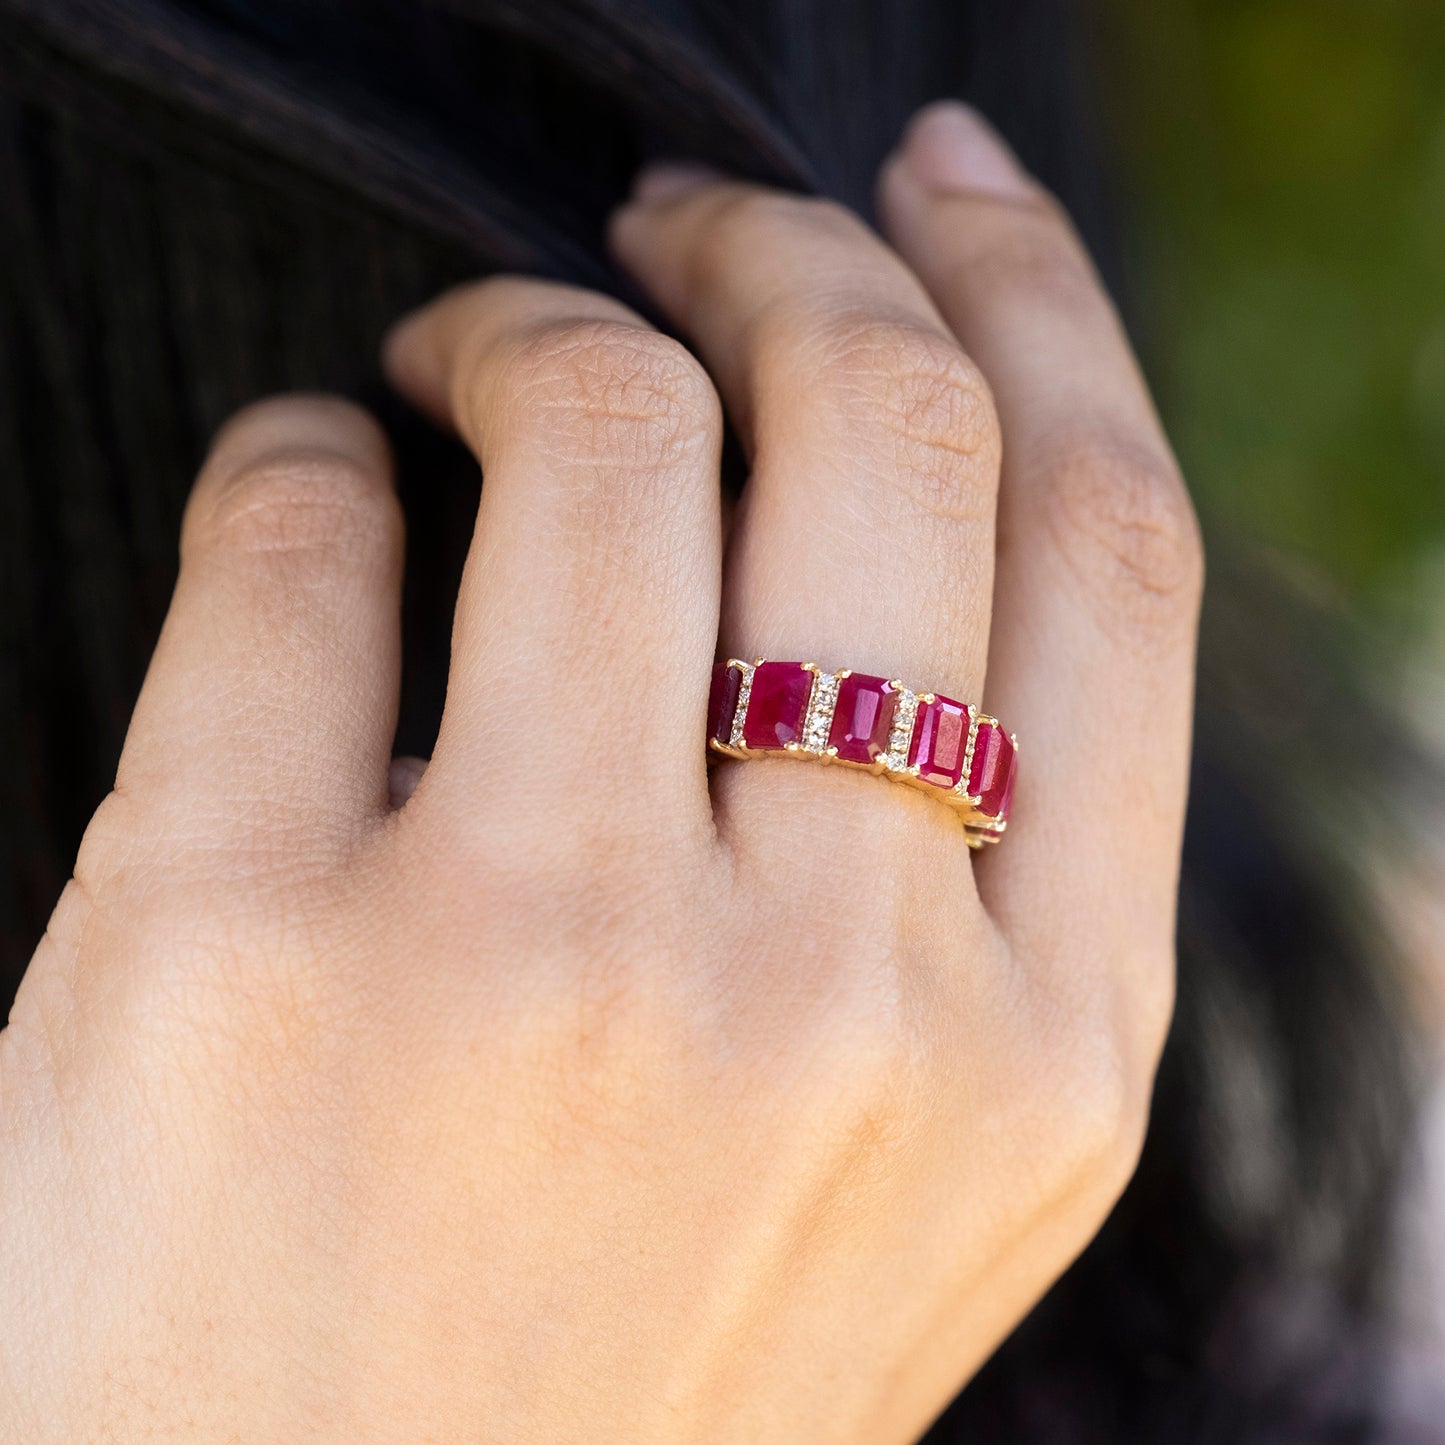 Red Stone With Diamond Stunning Design Superior Quality Ring For Men -  Style B008 at Rs 550.00 | पुरुषों की डायमंड रिंग - Soni Fashion, Rajkot |  ID: 2851571161055